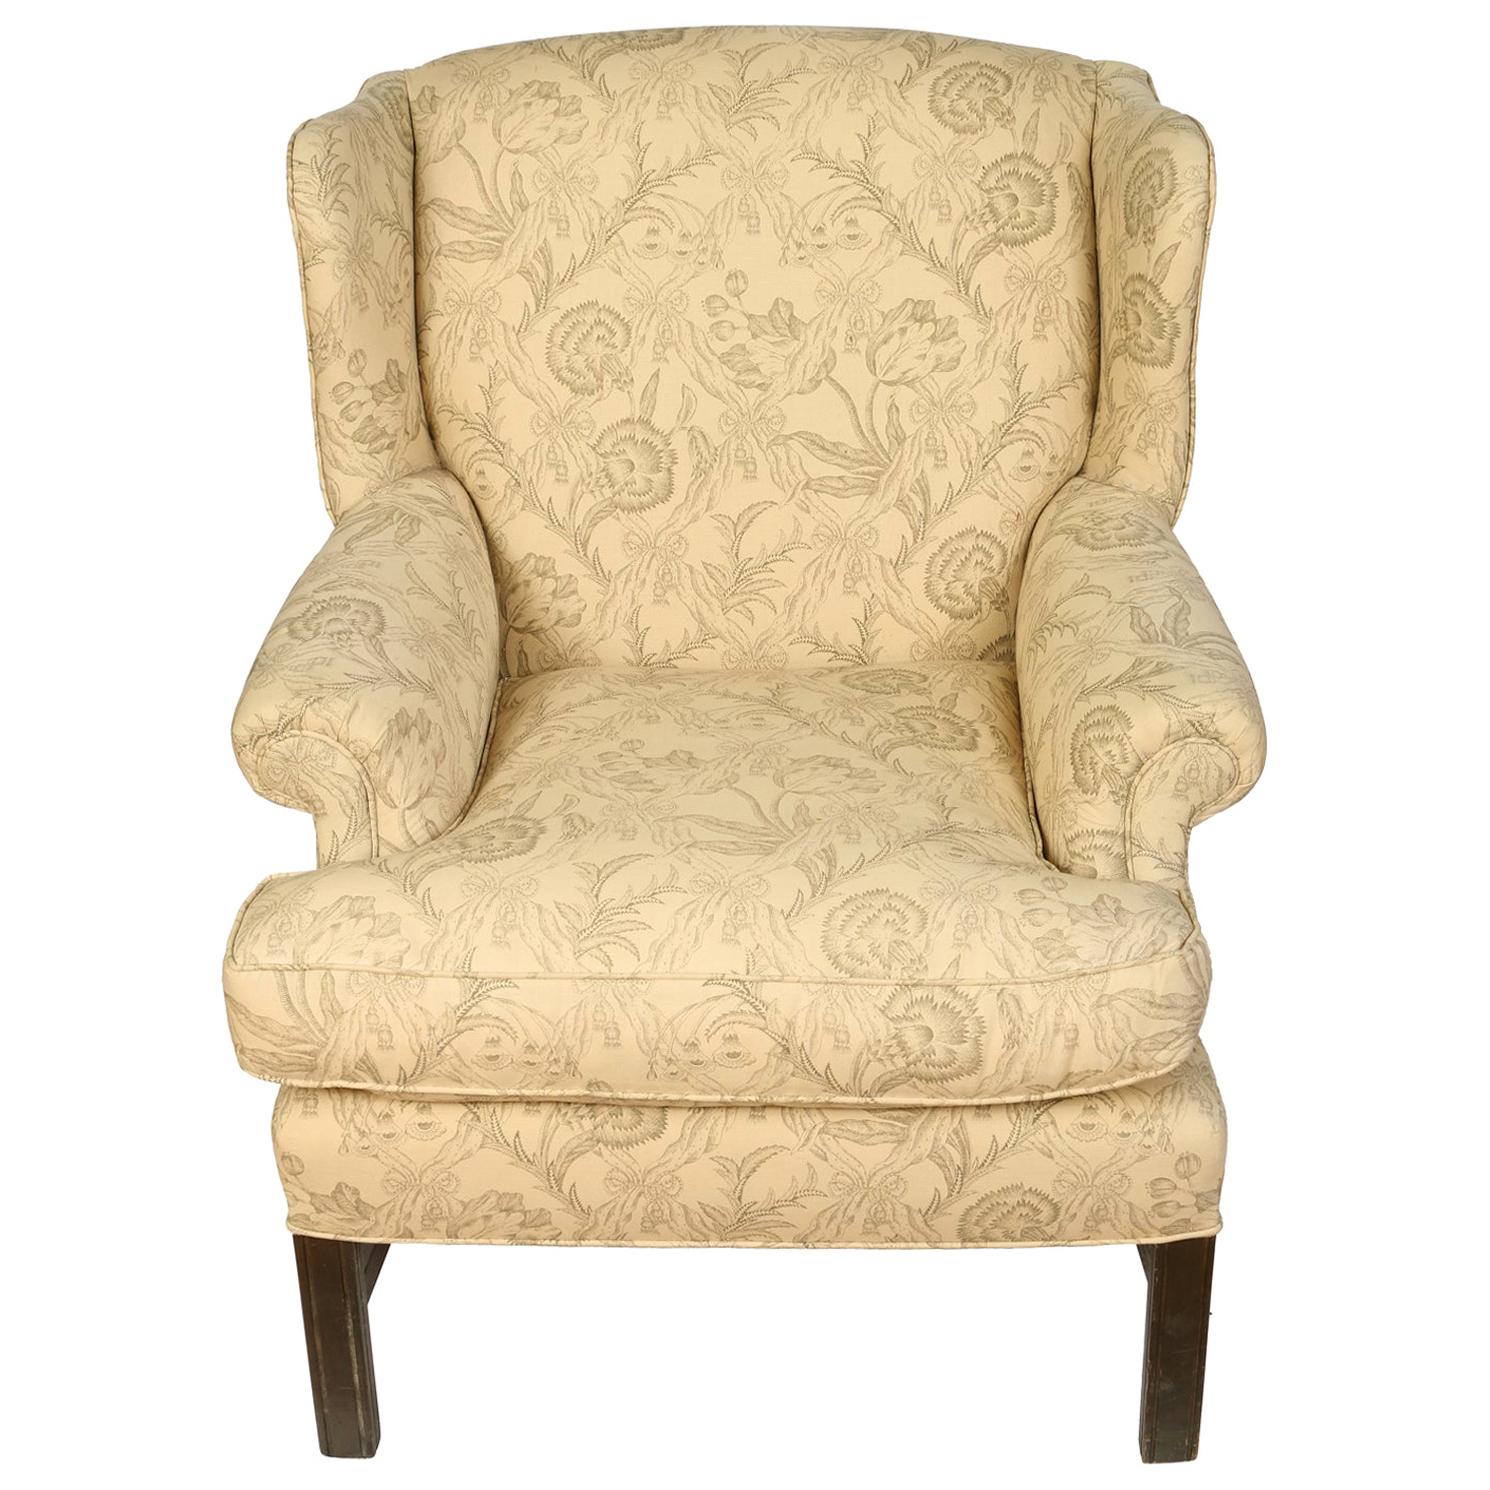 Upholstered English Mahogany Wingback Chair